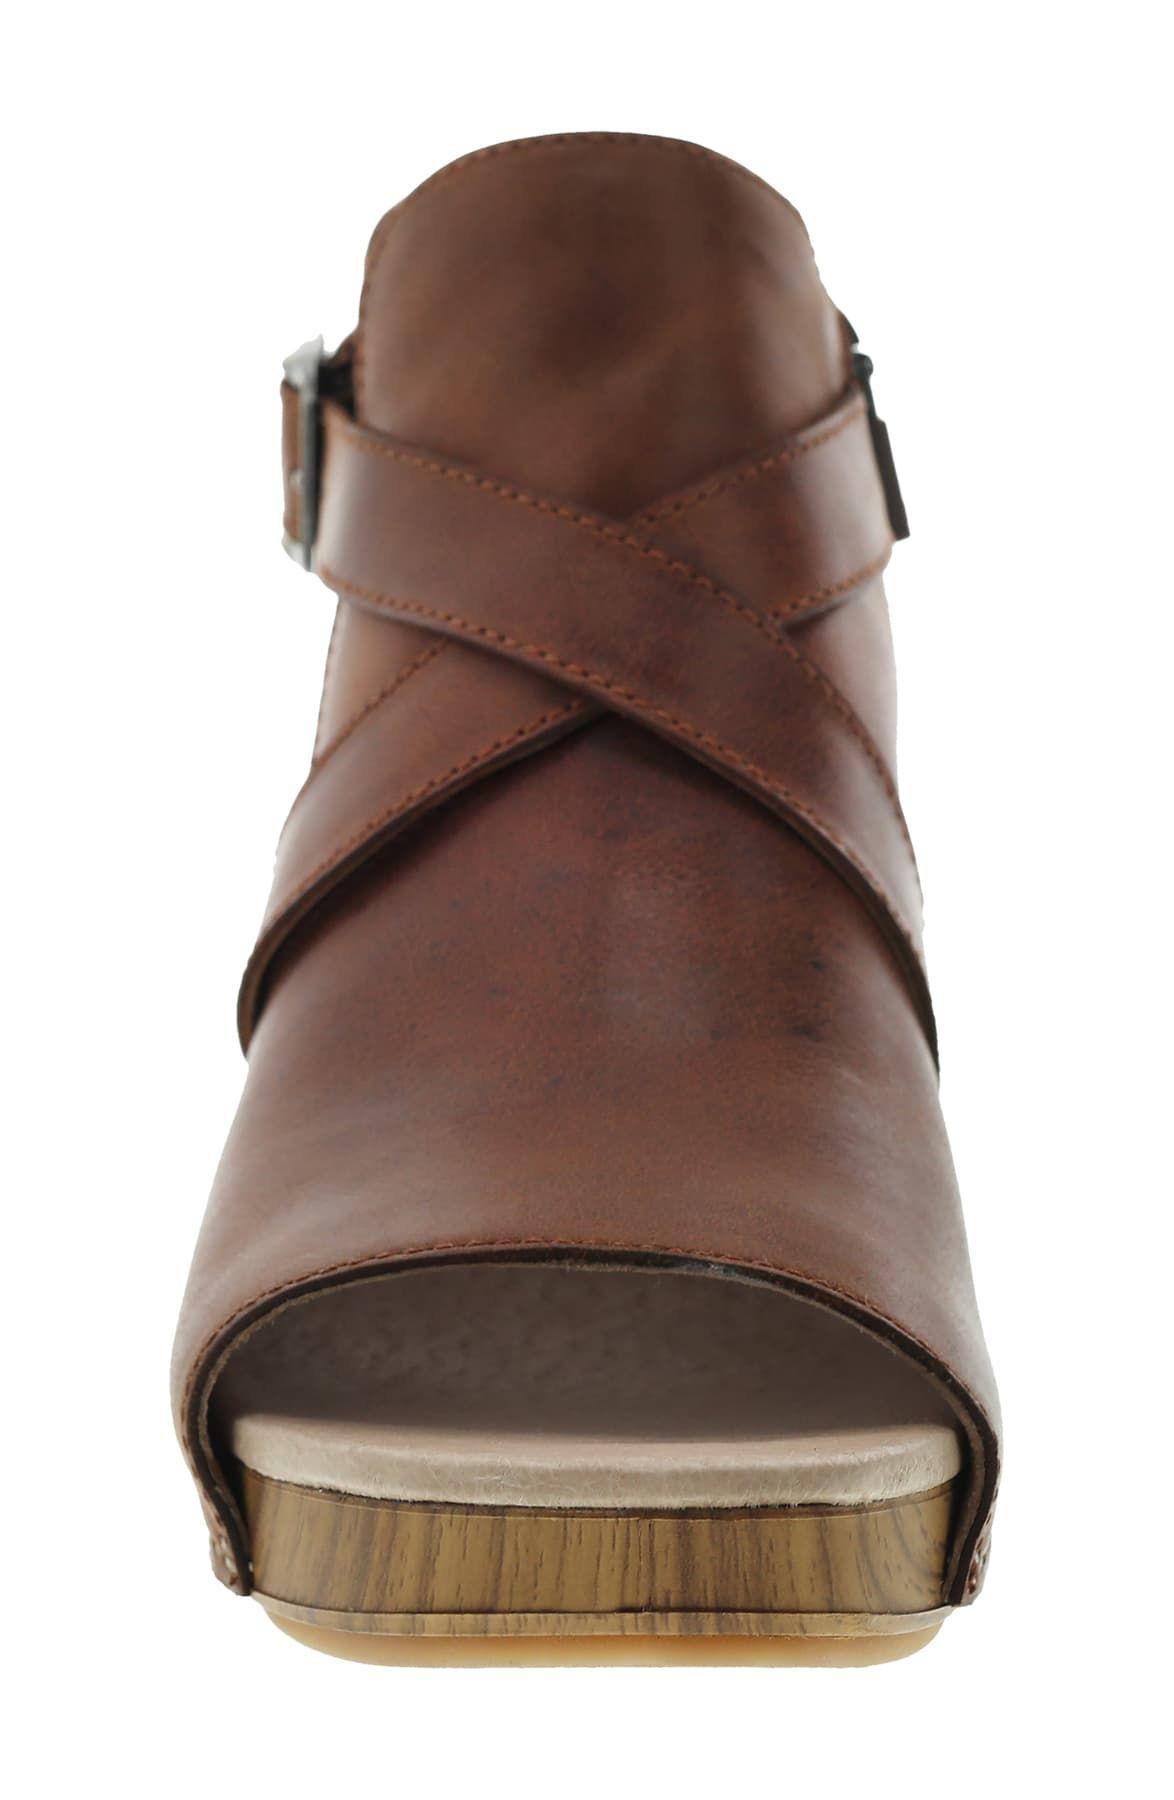 dansko arlene platform sandal